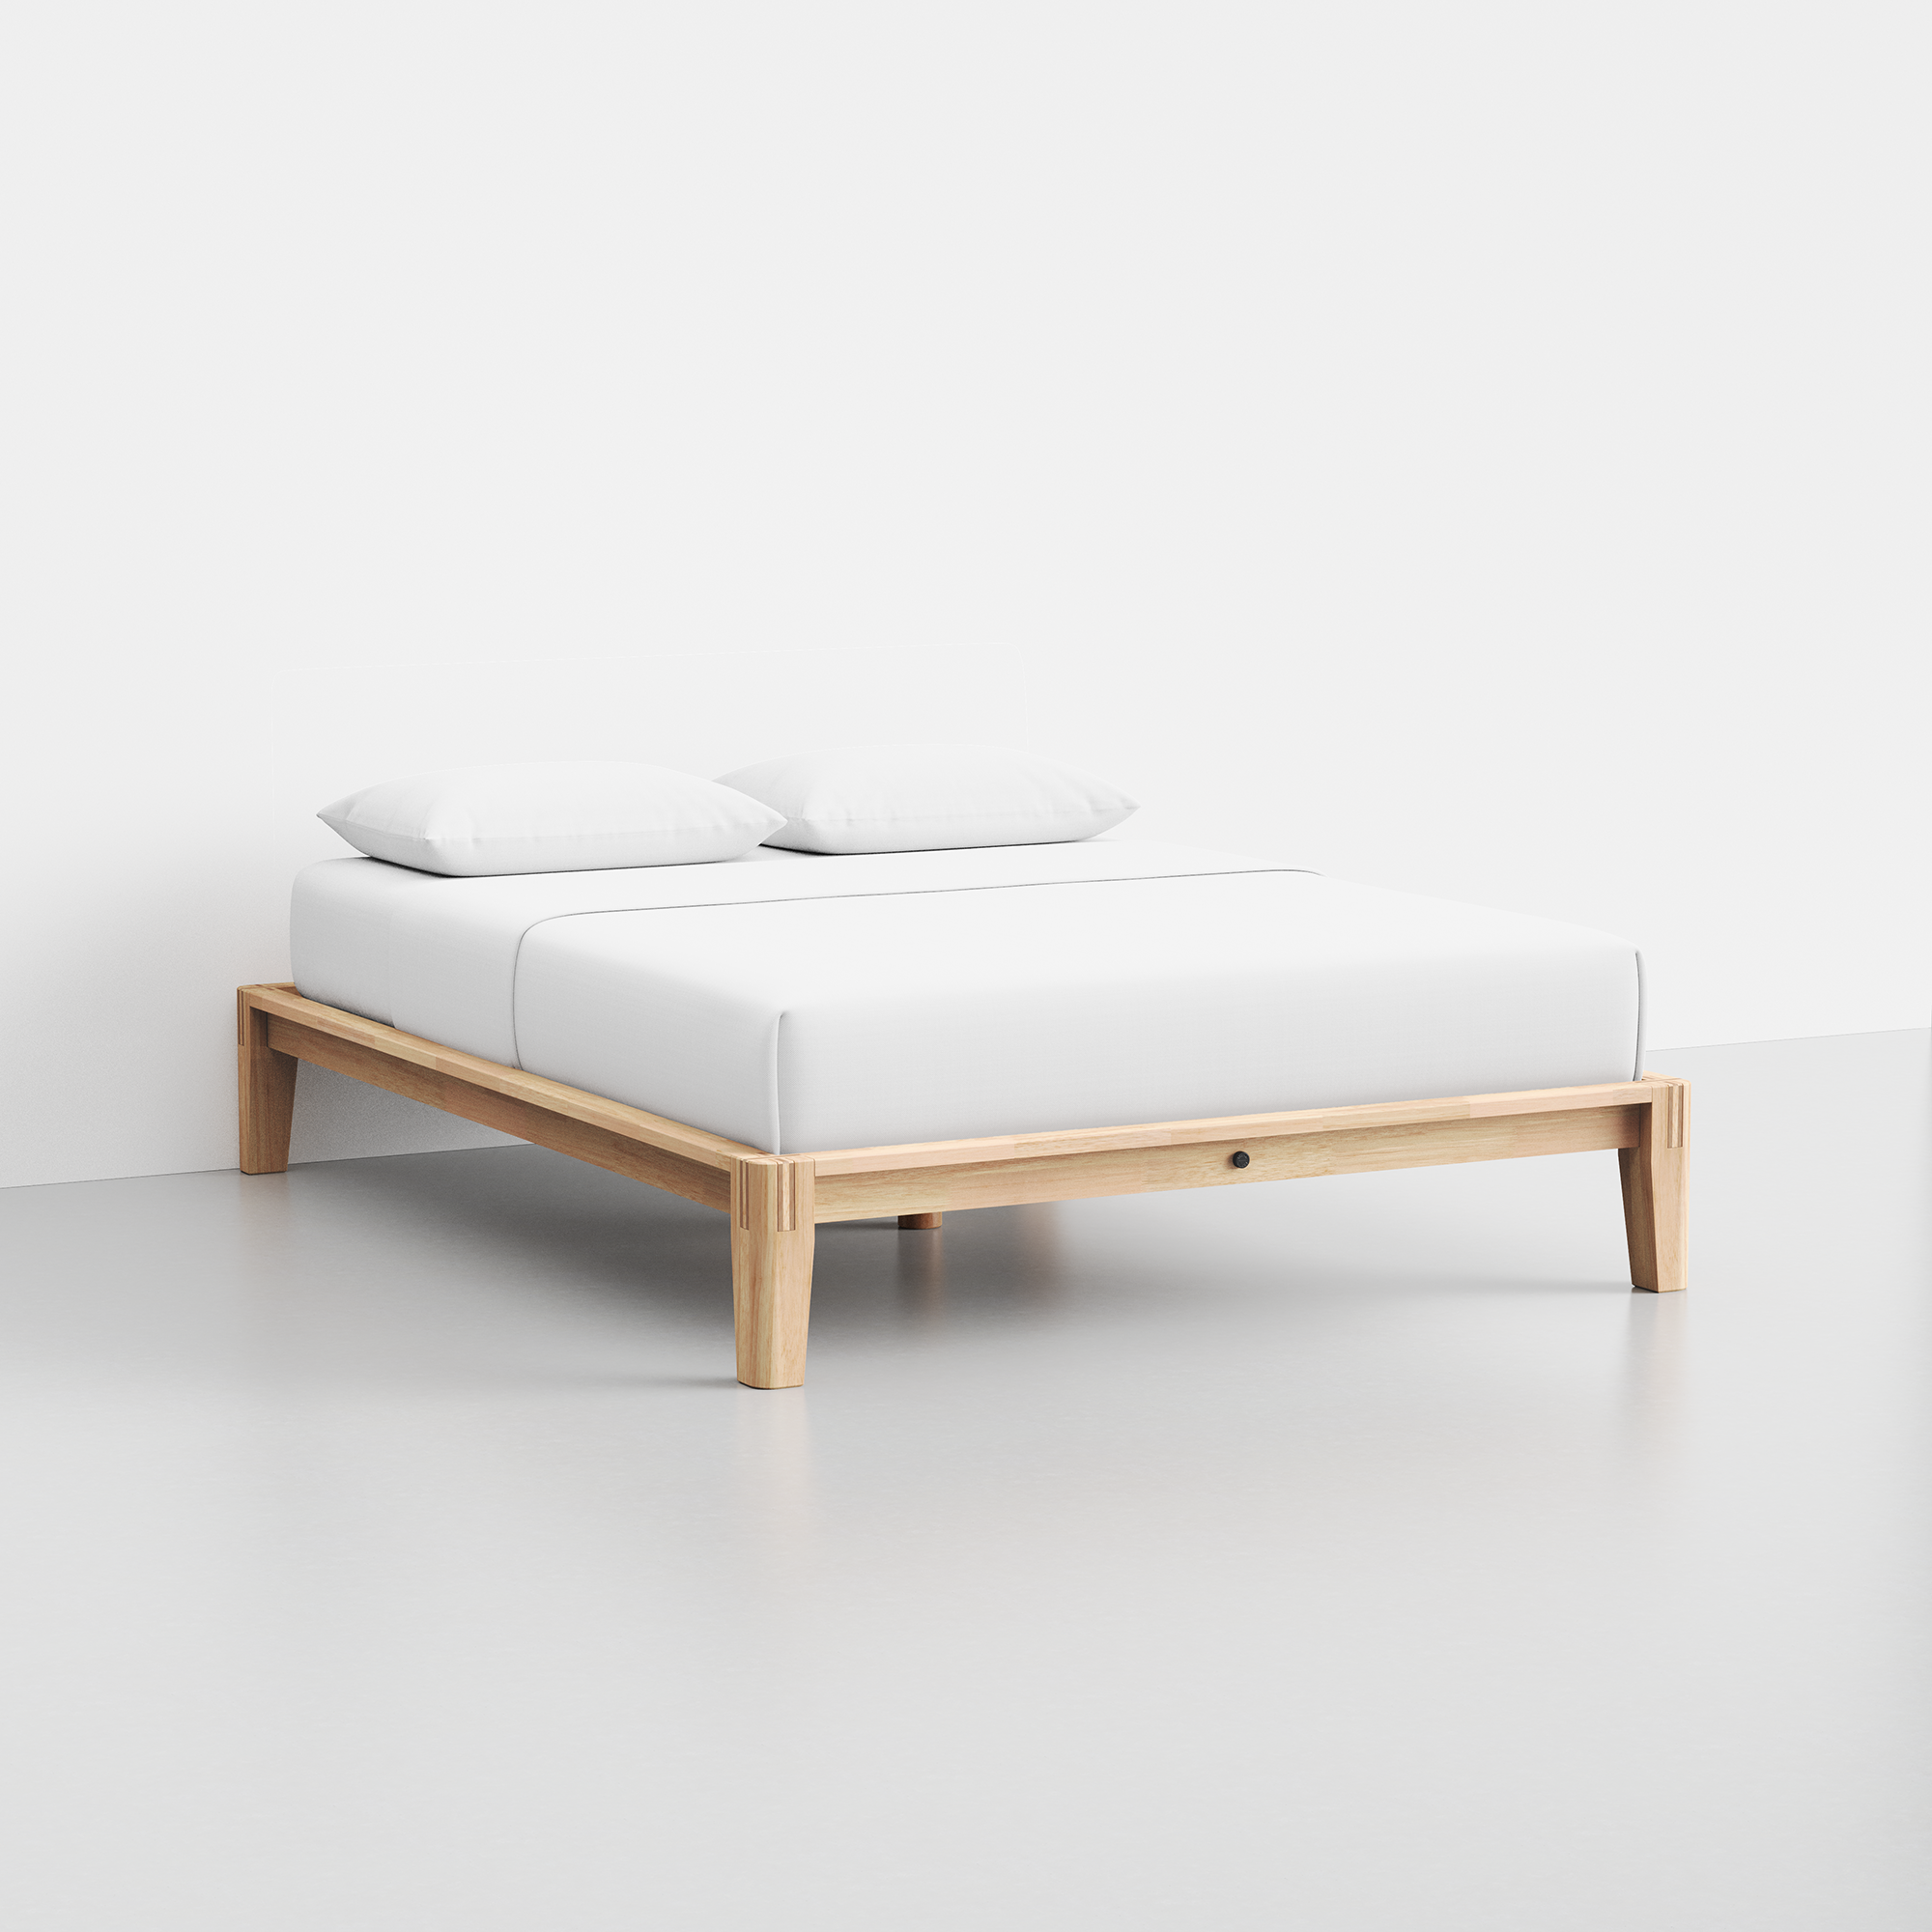 The Bed (Natural / Frame) - Render - Angled